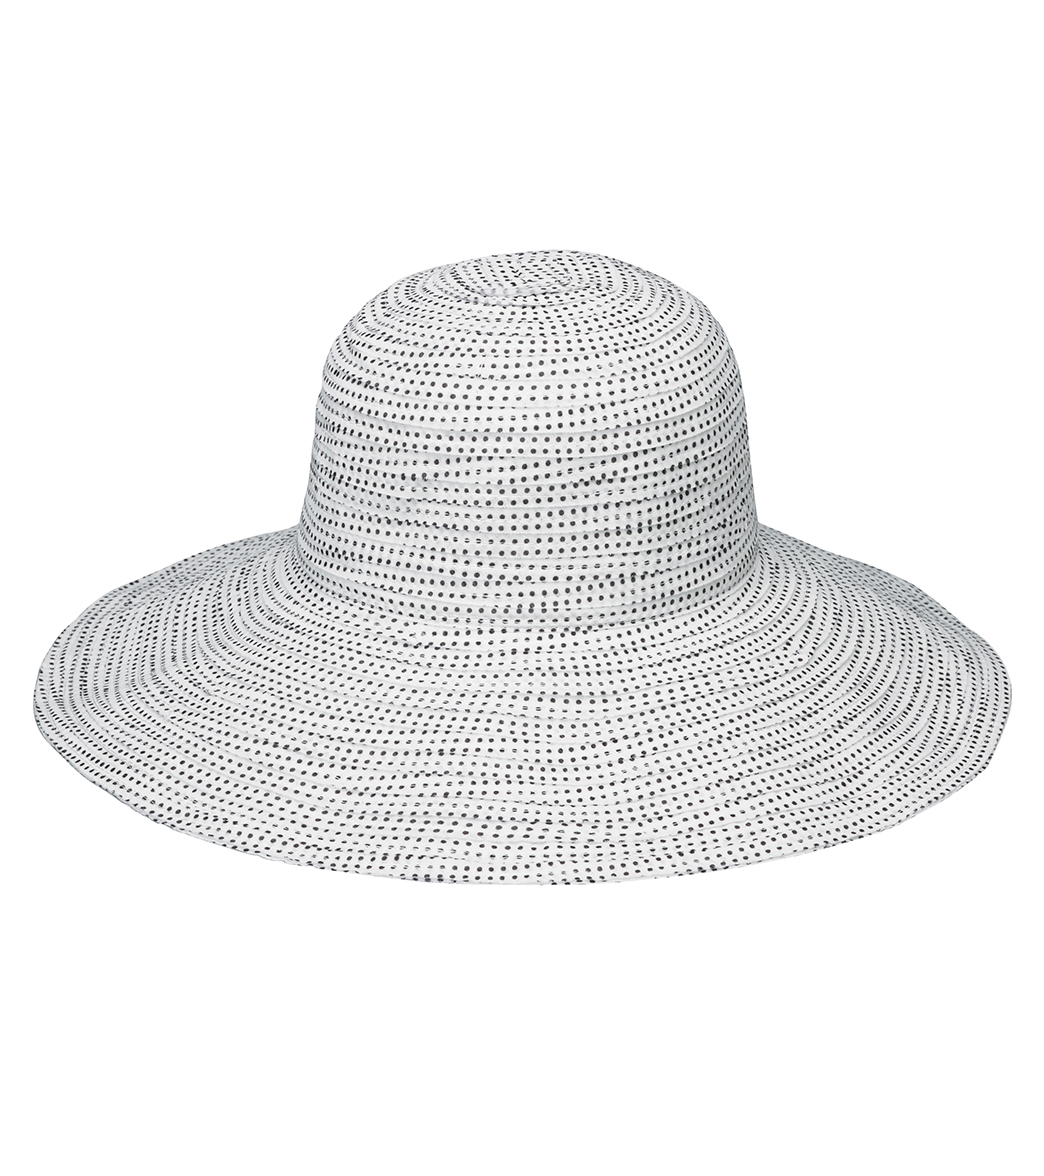 Wallaroo Women's Scrunchie Hat - White/Black Dots Polyester - Swimoutlet.com